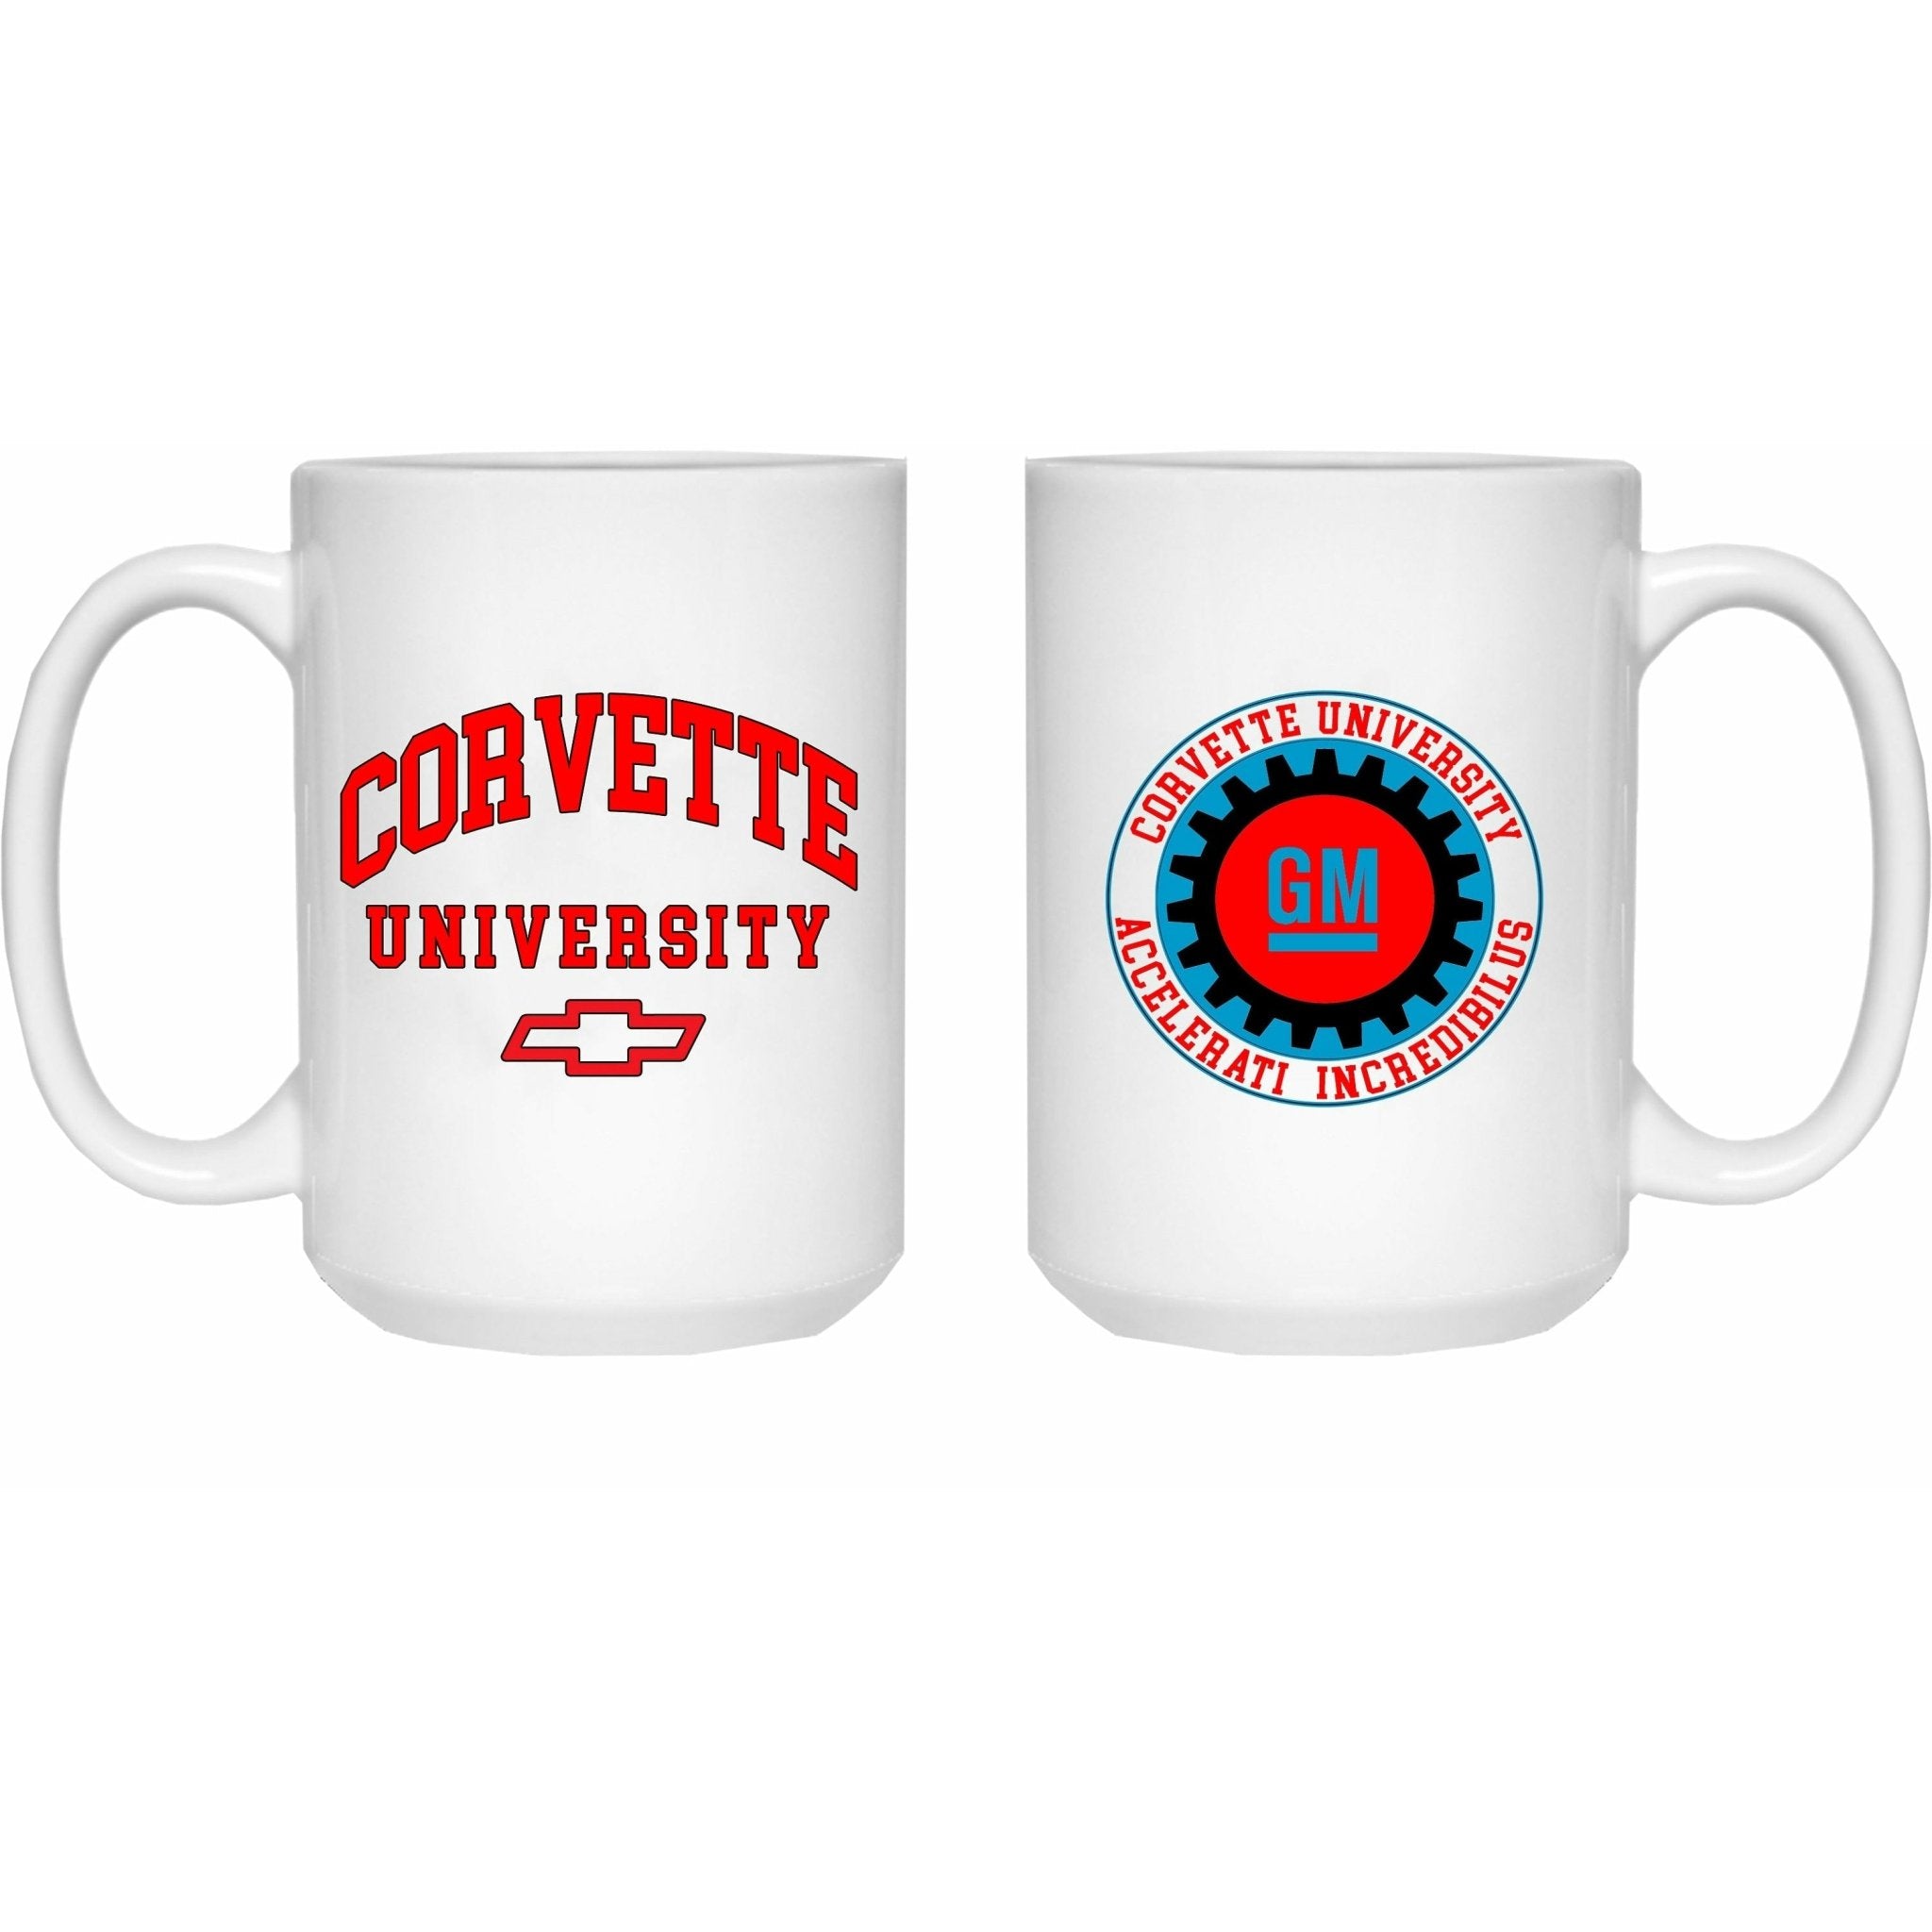 Corvette University White Ceramic Coffee Mug, 11 and 15oz. - Vette1 - Corvette University